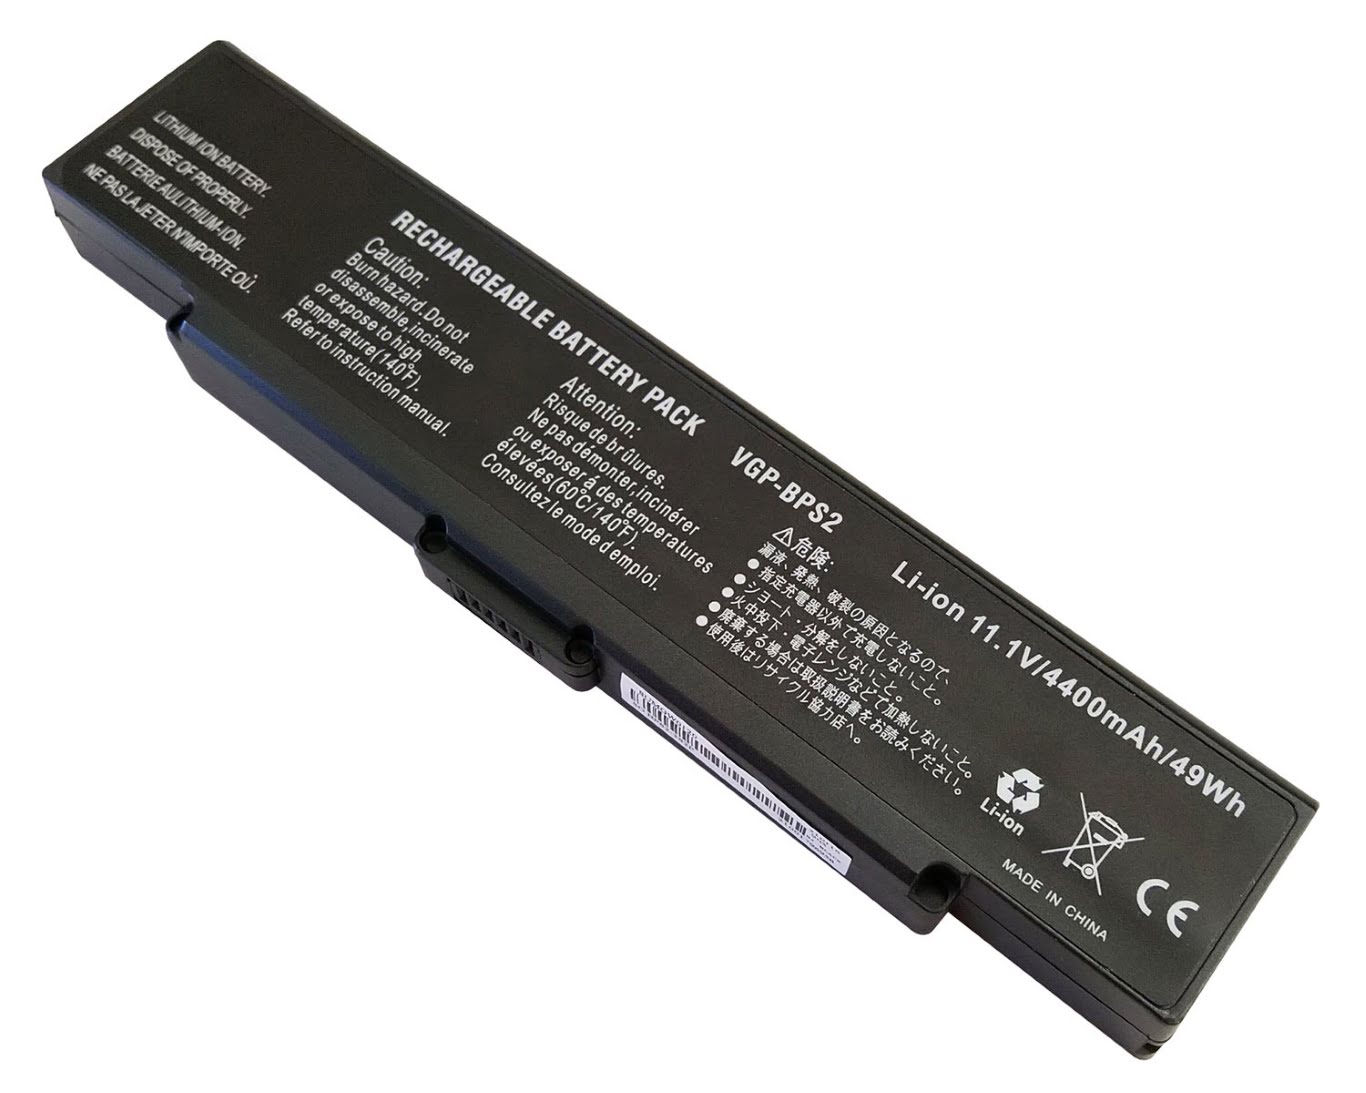 VGP-BPL2, VGP-BPL2C replacement Laptop Battery for Sony Vaio AR130, Vaio AR130G, 6 cells, 11.1V, 4400mAh